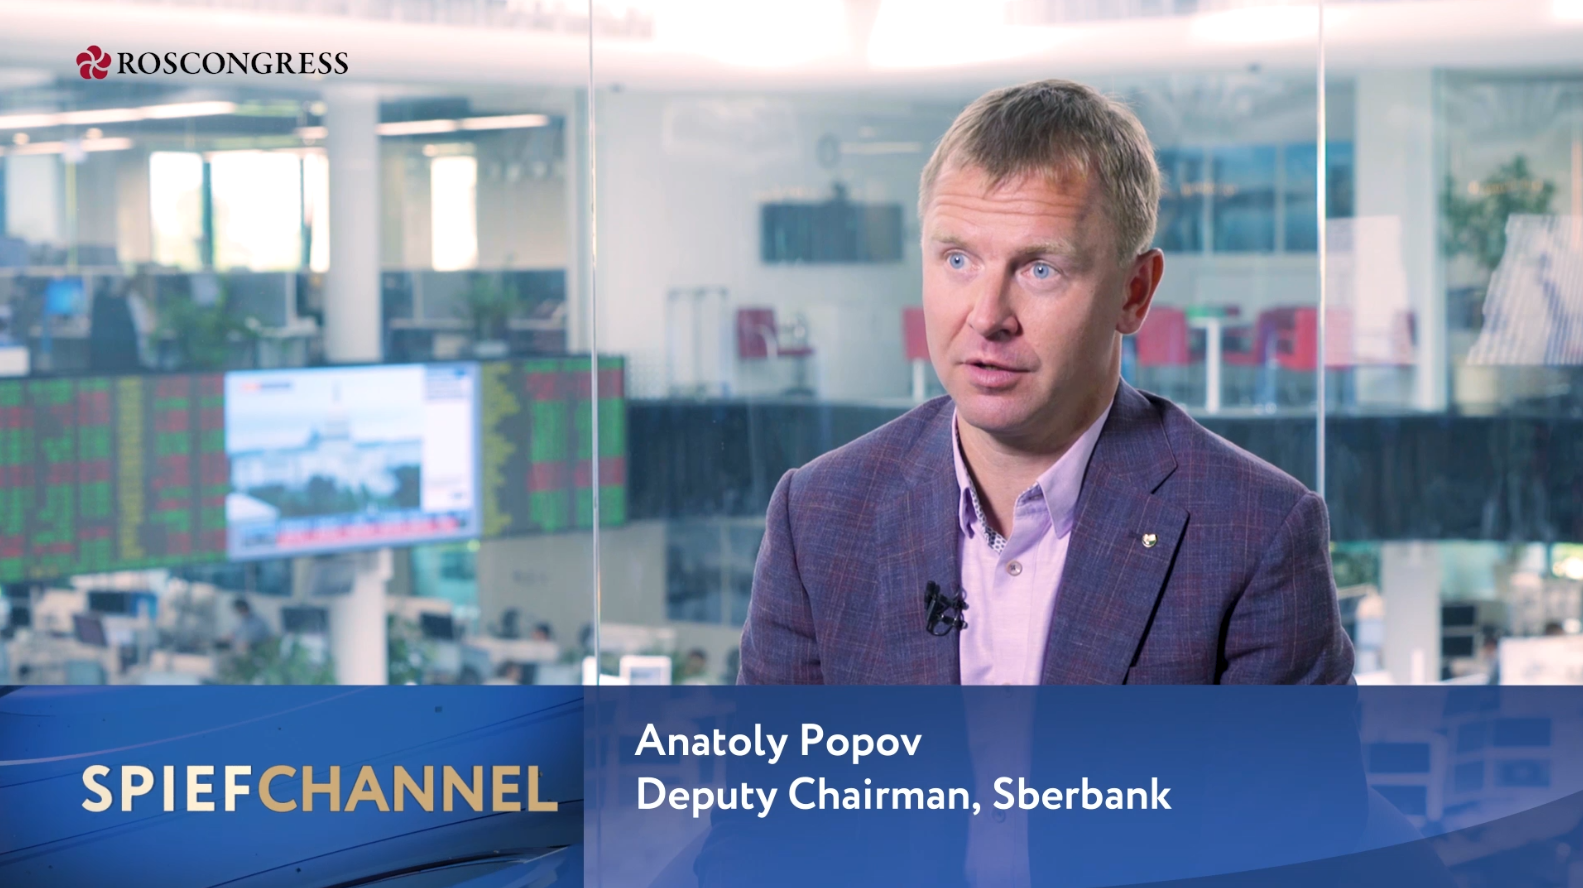 Anatoly Popov, Deputy Chairman of the Executive Board, Sberbank